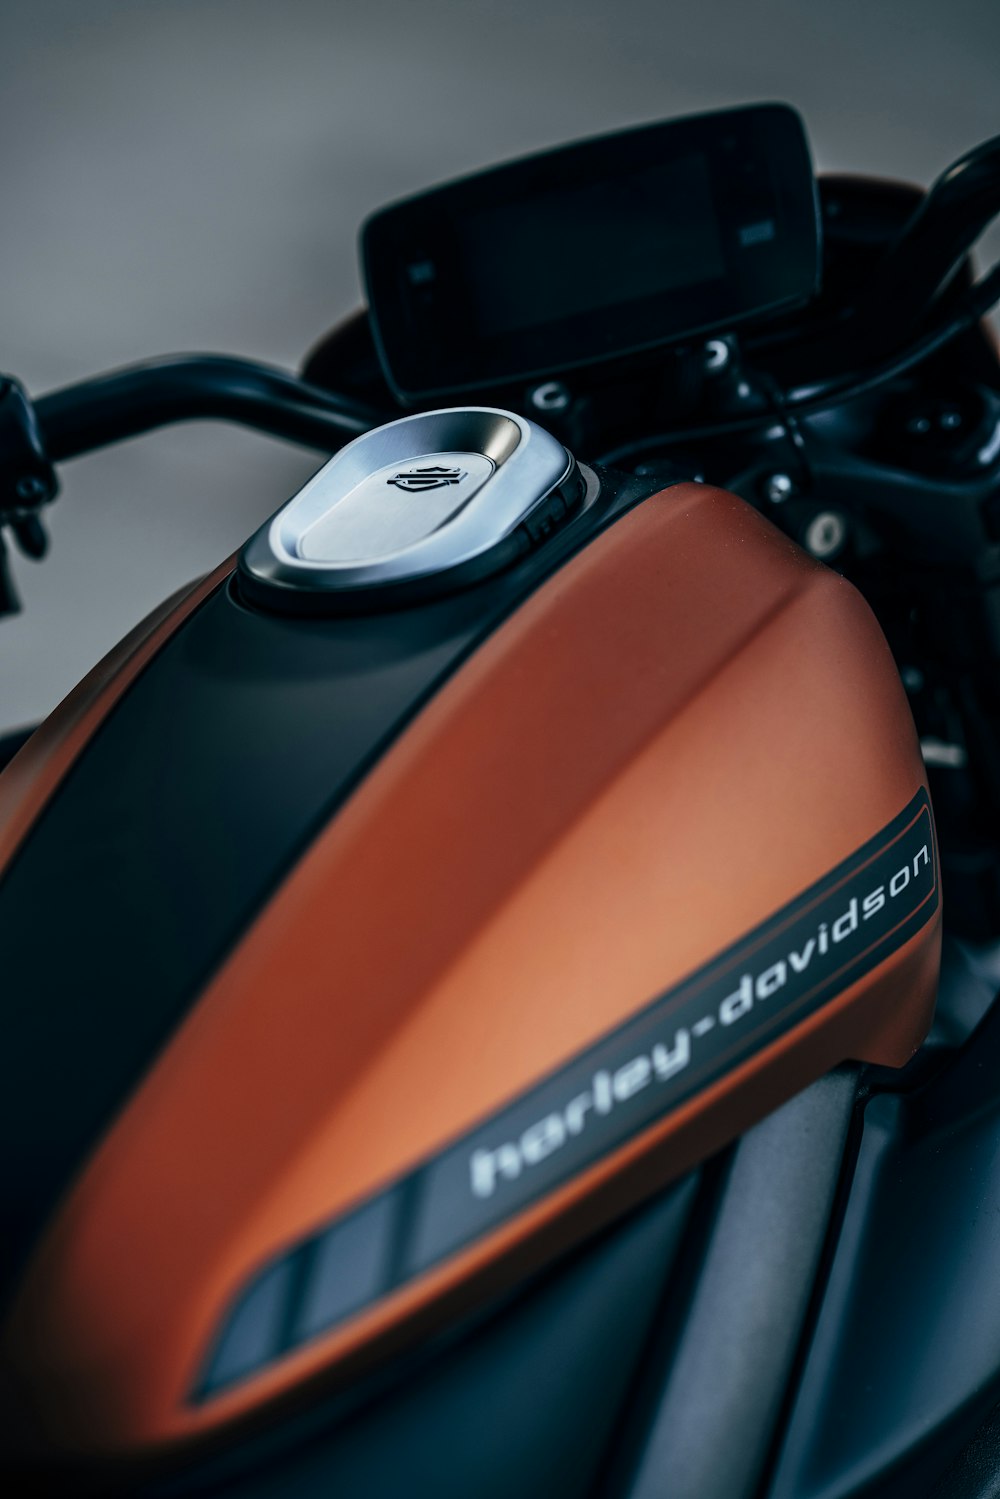 orange and black Harley-Davidson backbone motorcycle